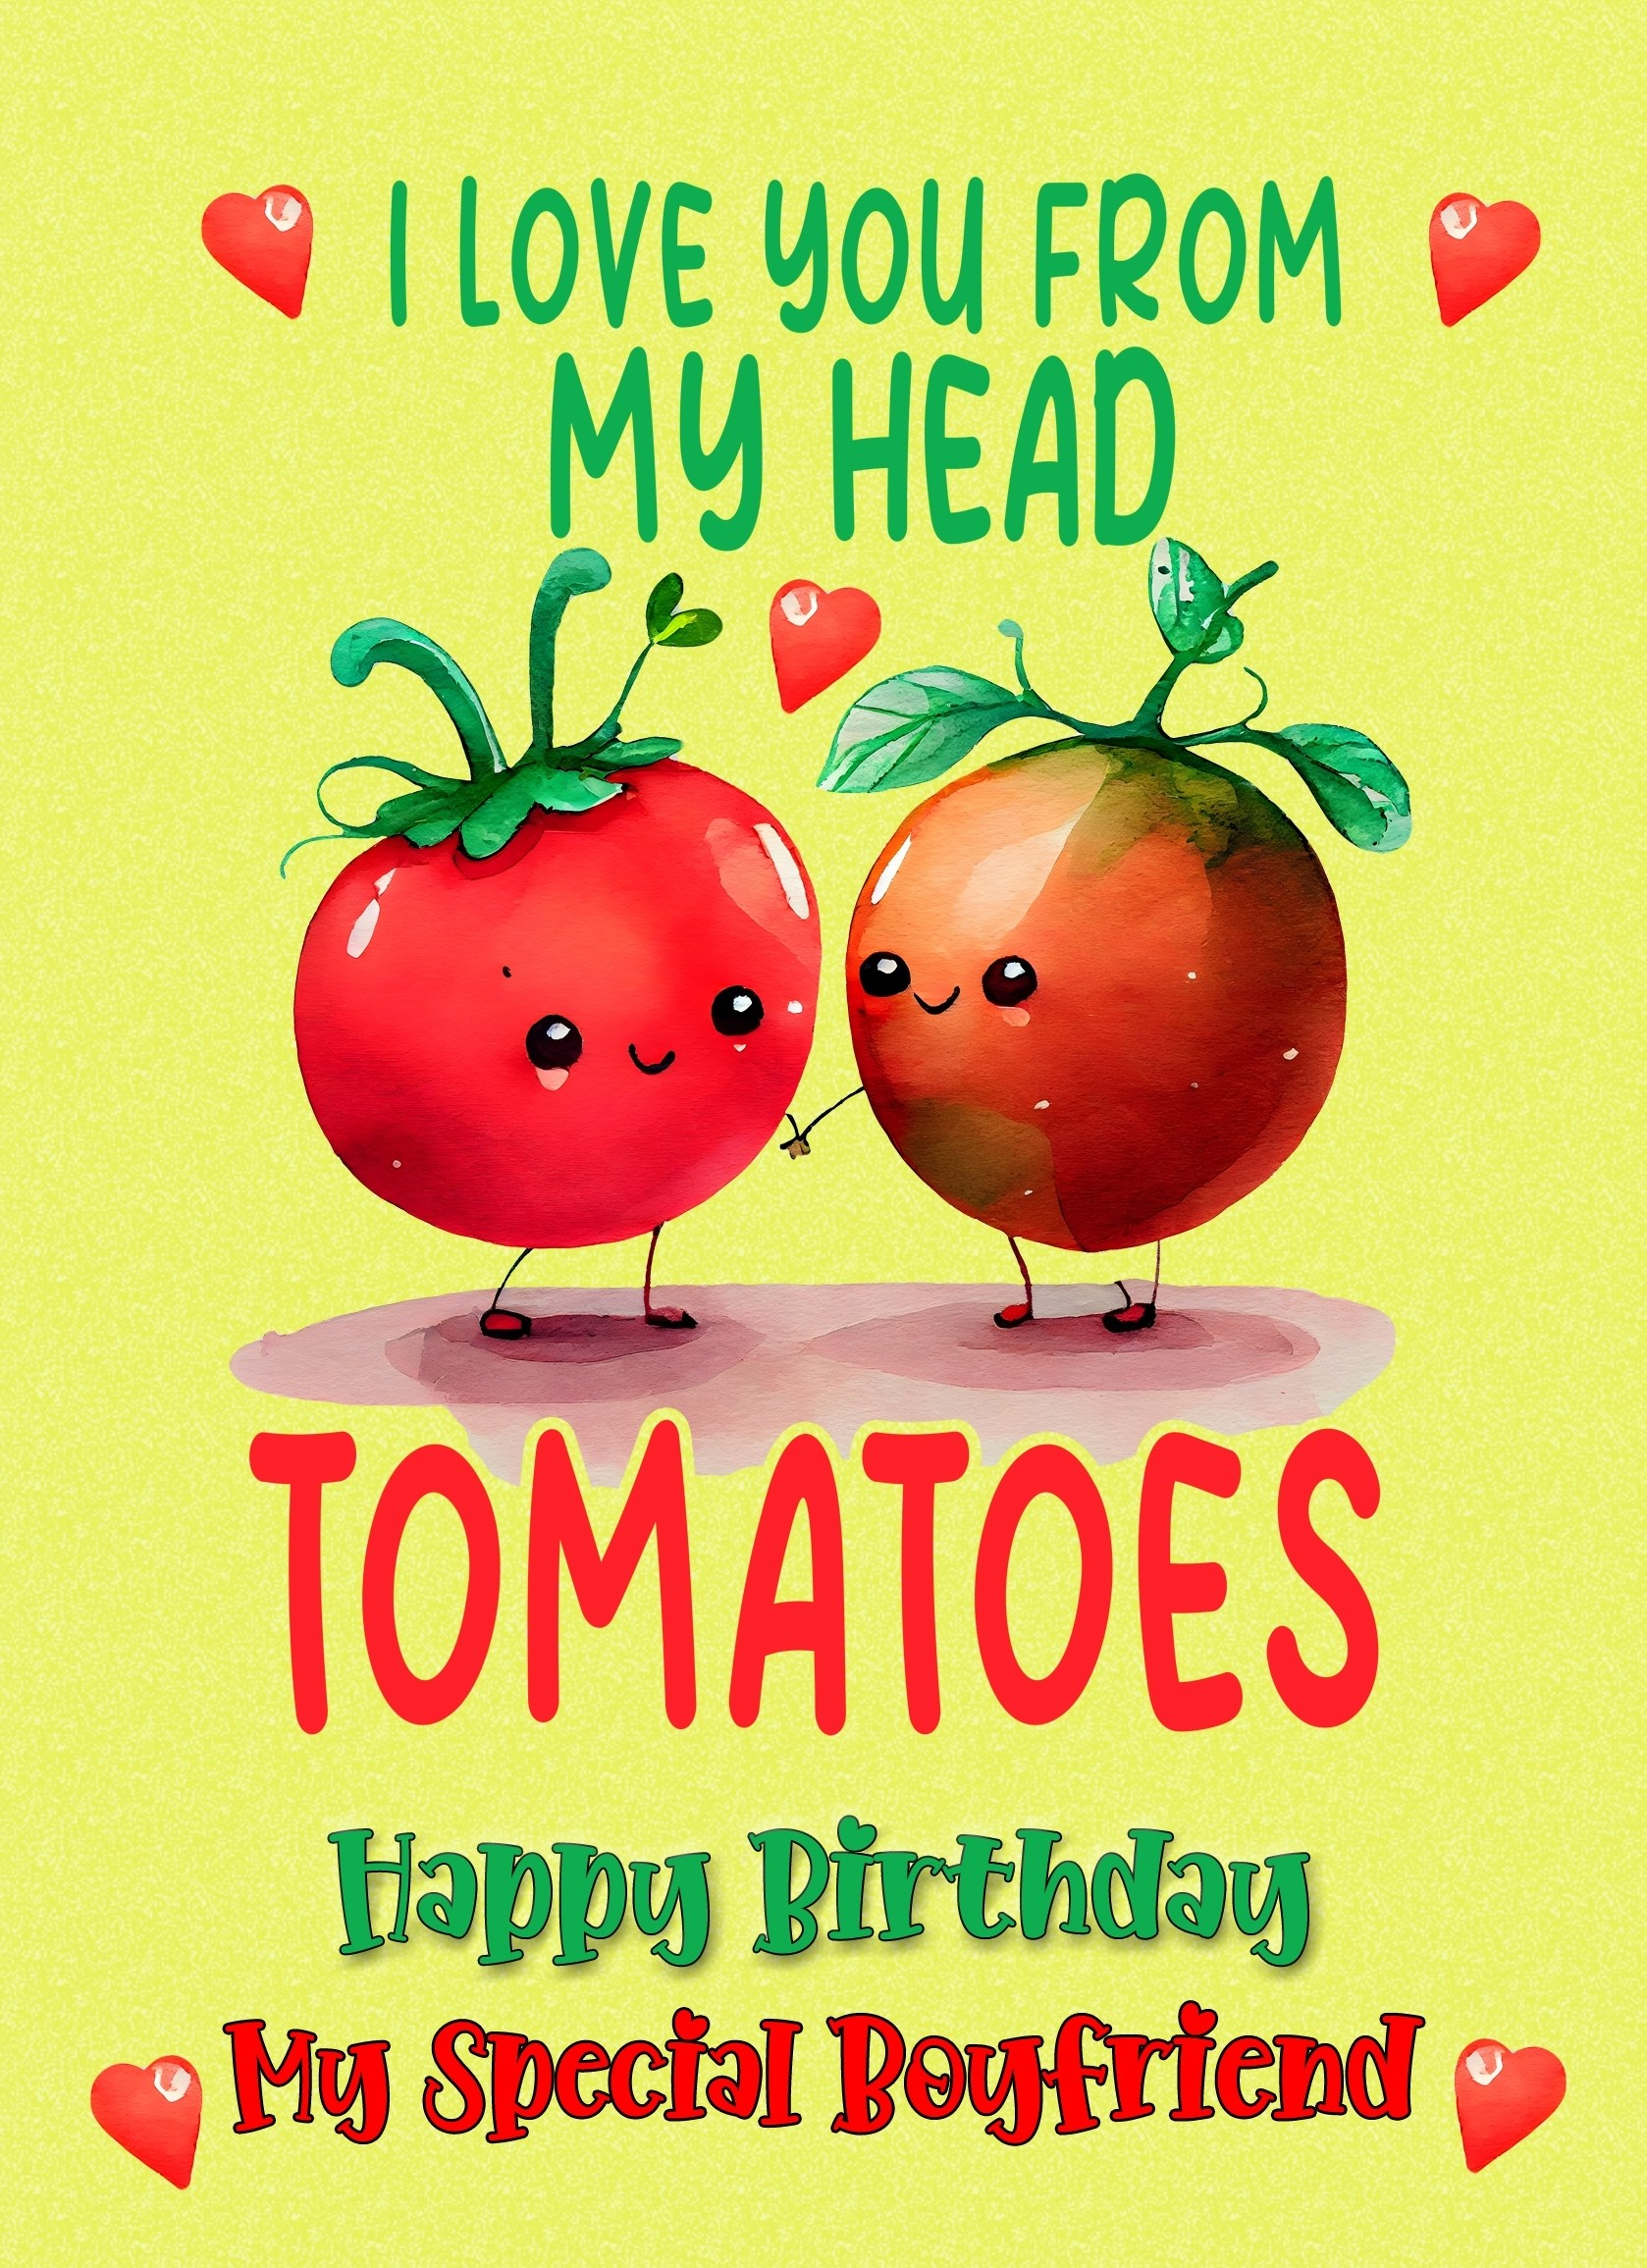 Funny Pun Romantic Birthday Card for Boyfriend (Tomatoes)